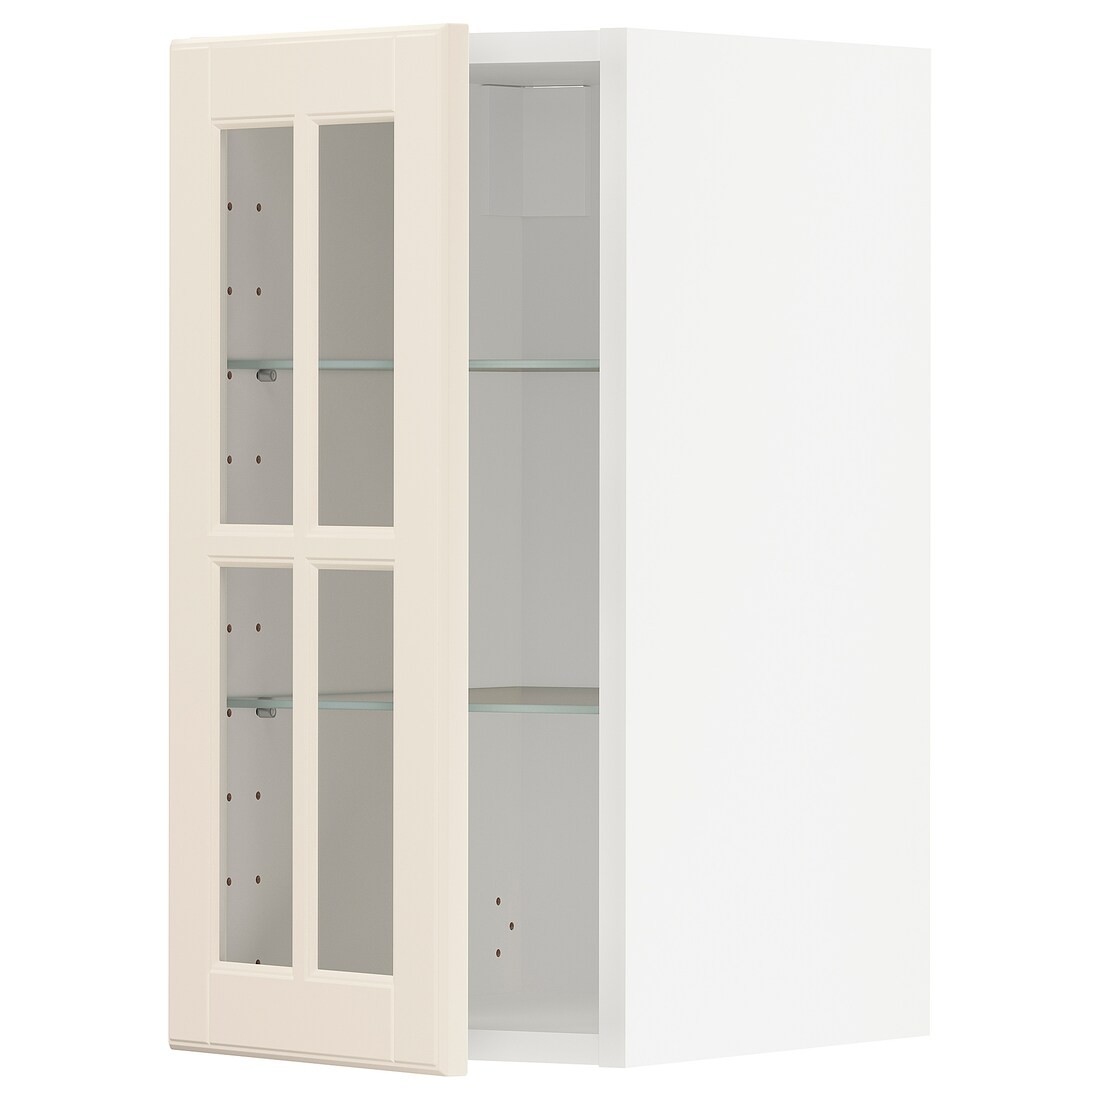 IKEA METOD МЕТОД Навесной шкаф, белый / Bodbyn кремовый, 30x60 см 99394989 | 993.949.89